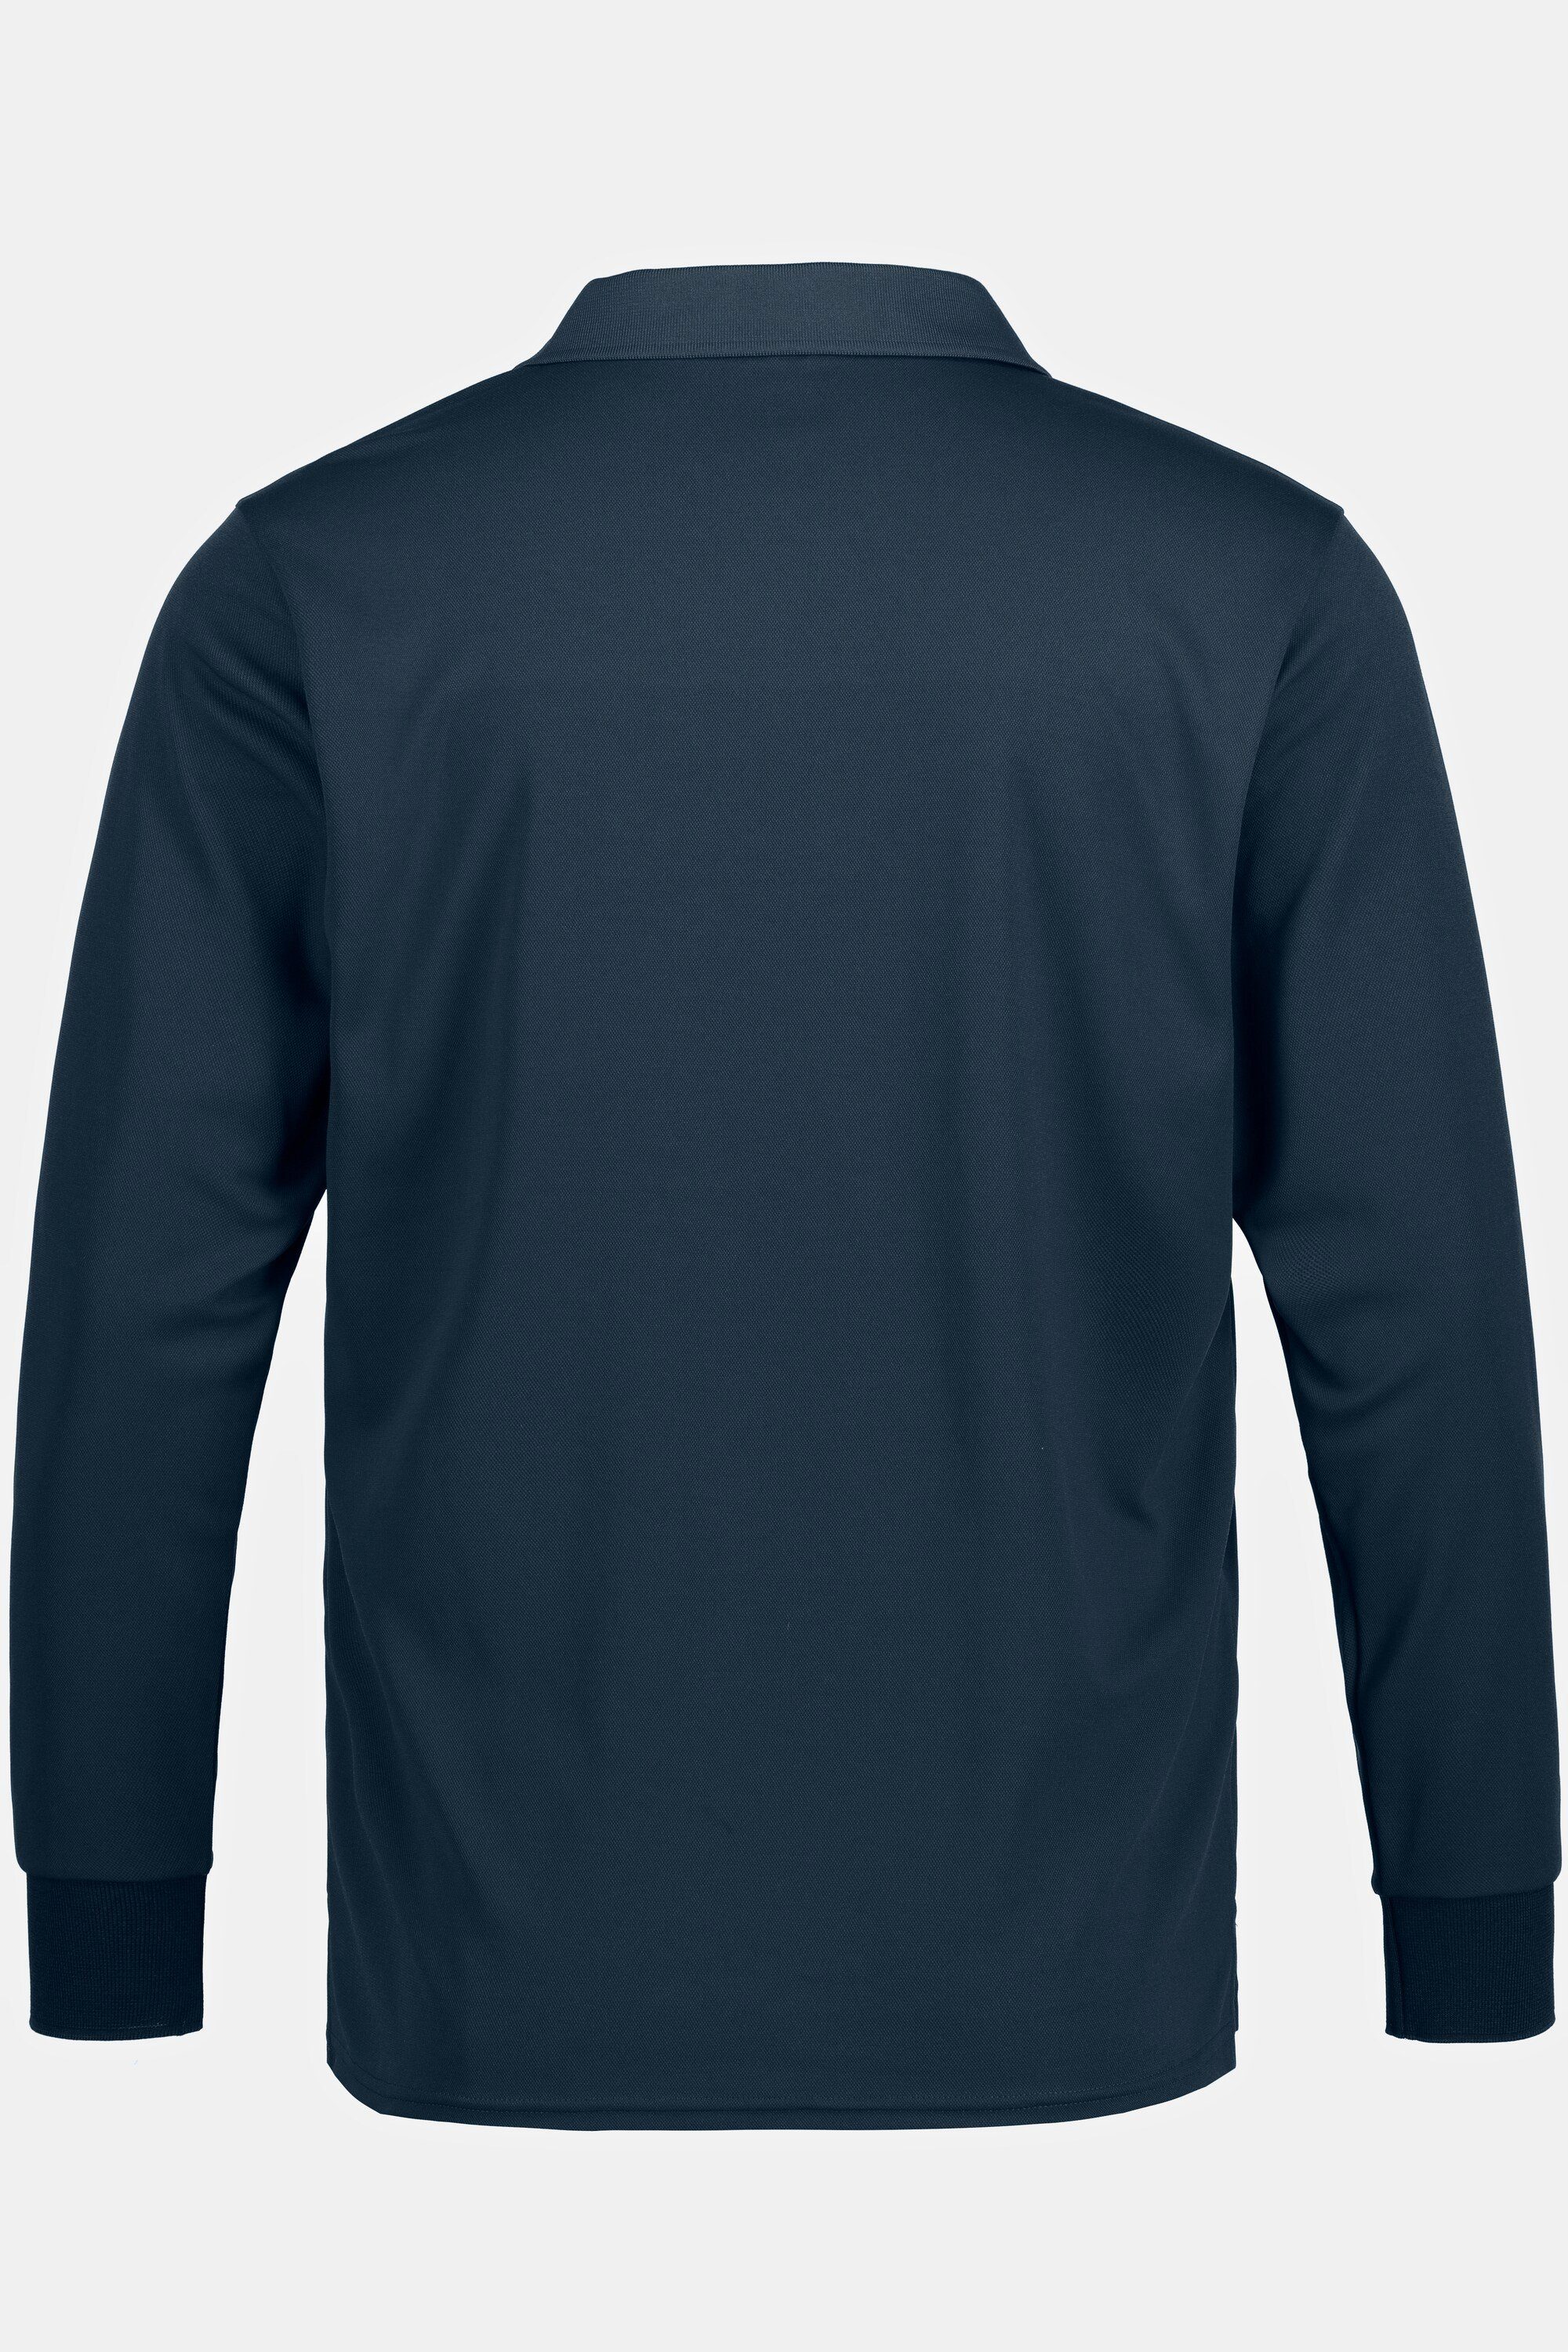 Poloshirt Poloshirt Golf Langarm navy blau JP1880 QuickDry